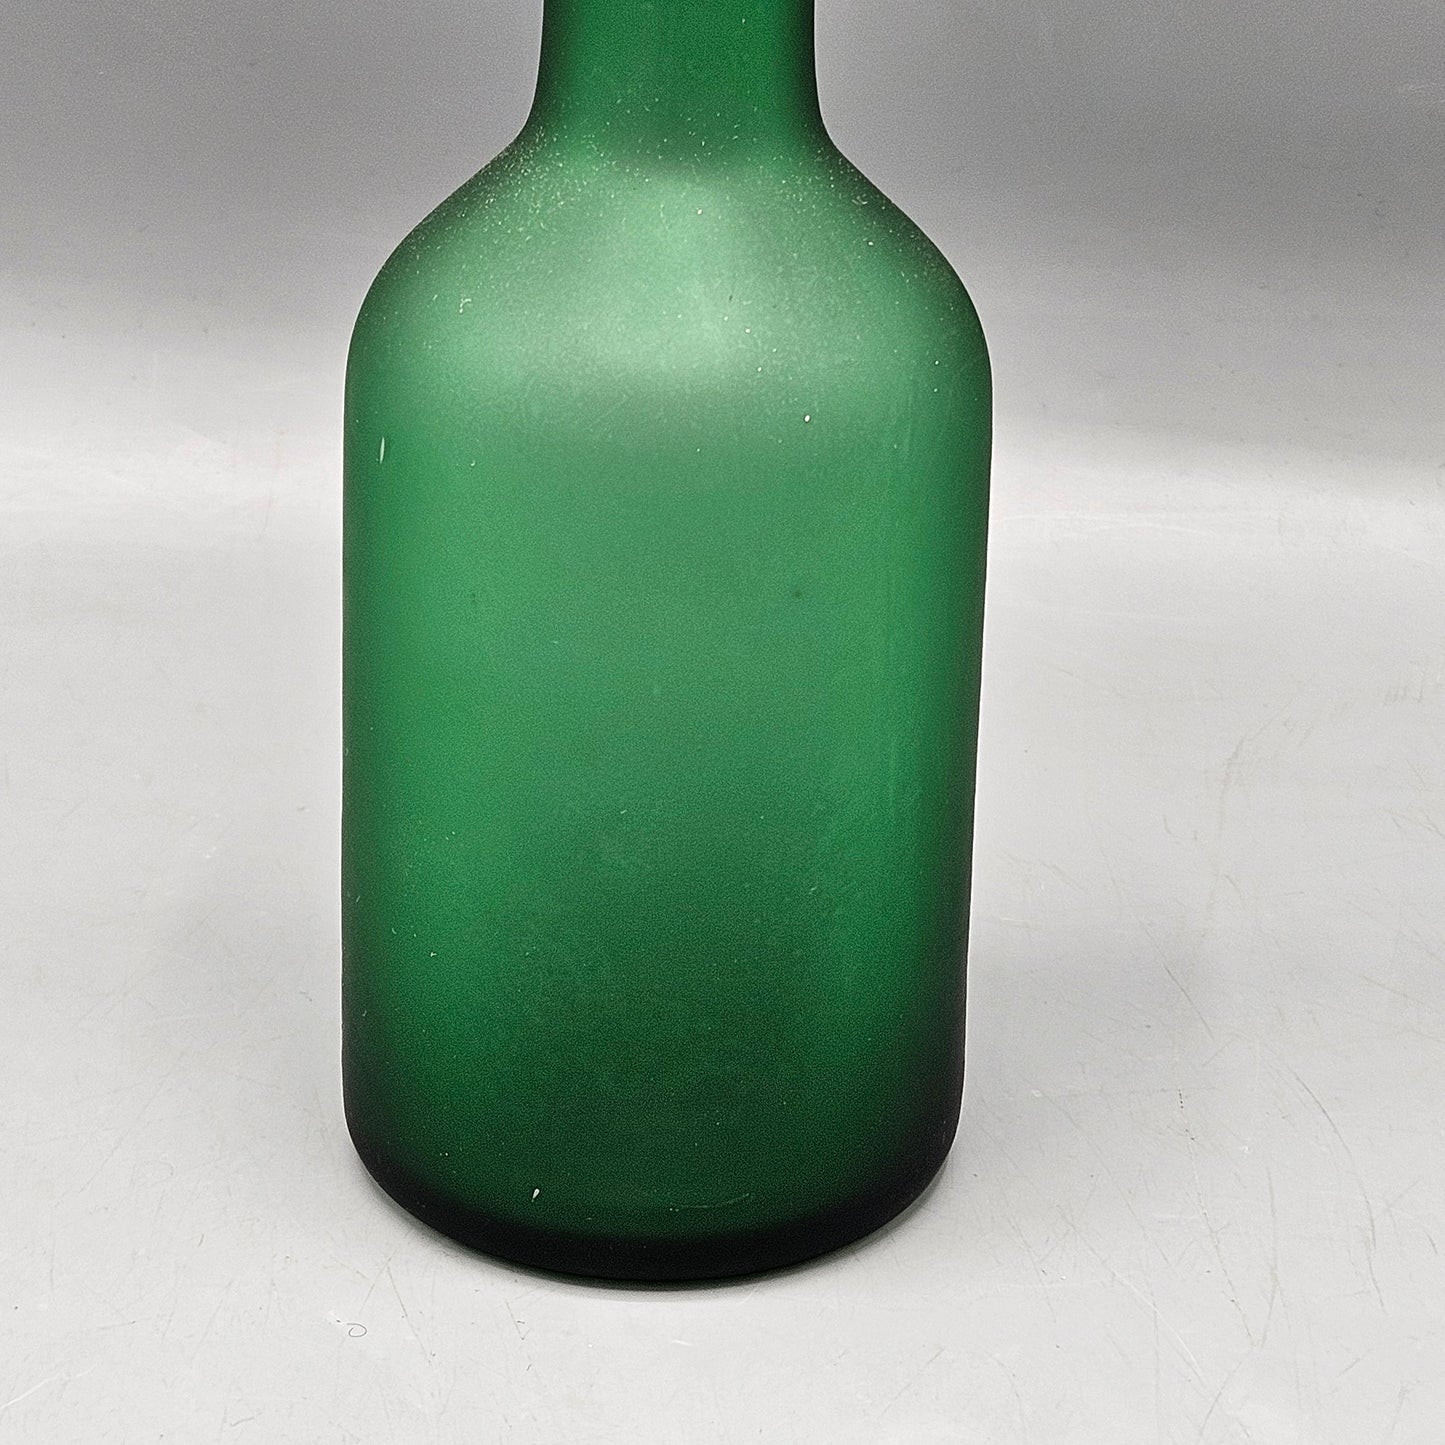 Unique Green Blown Glass Bottle With Colorful Bubble Stopper